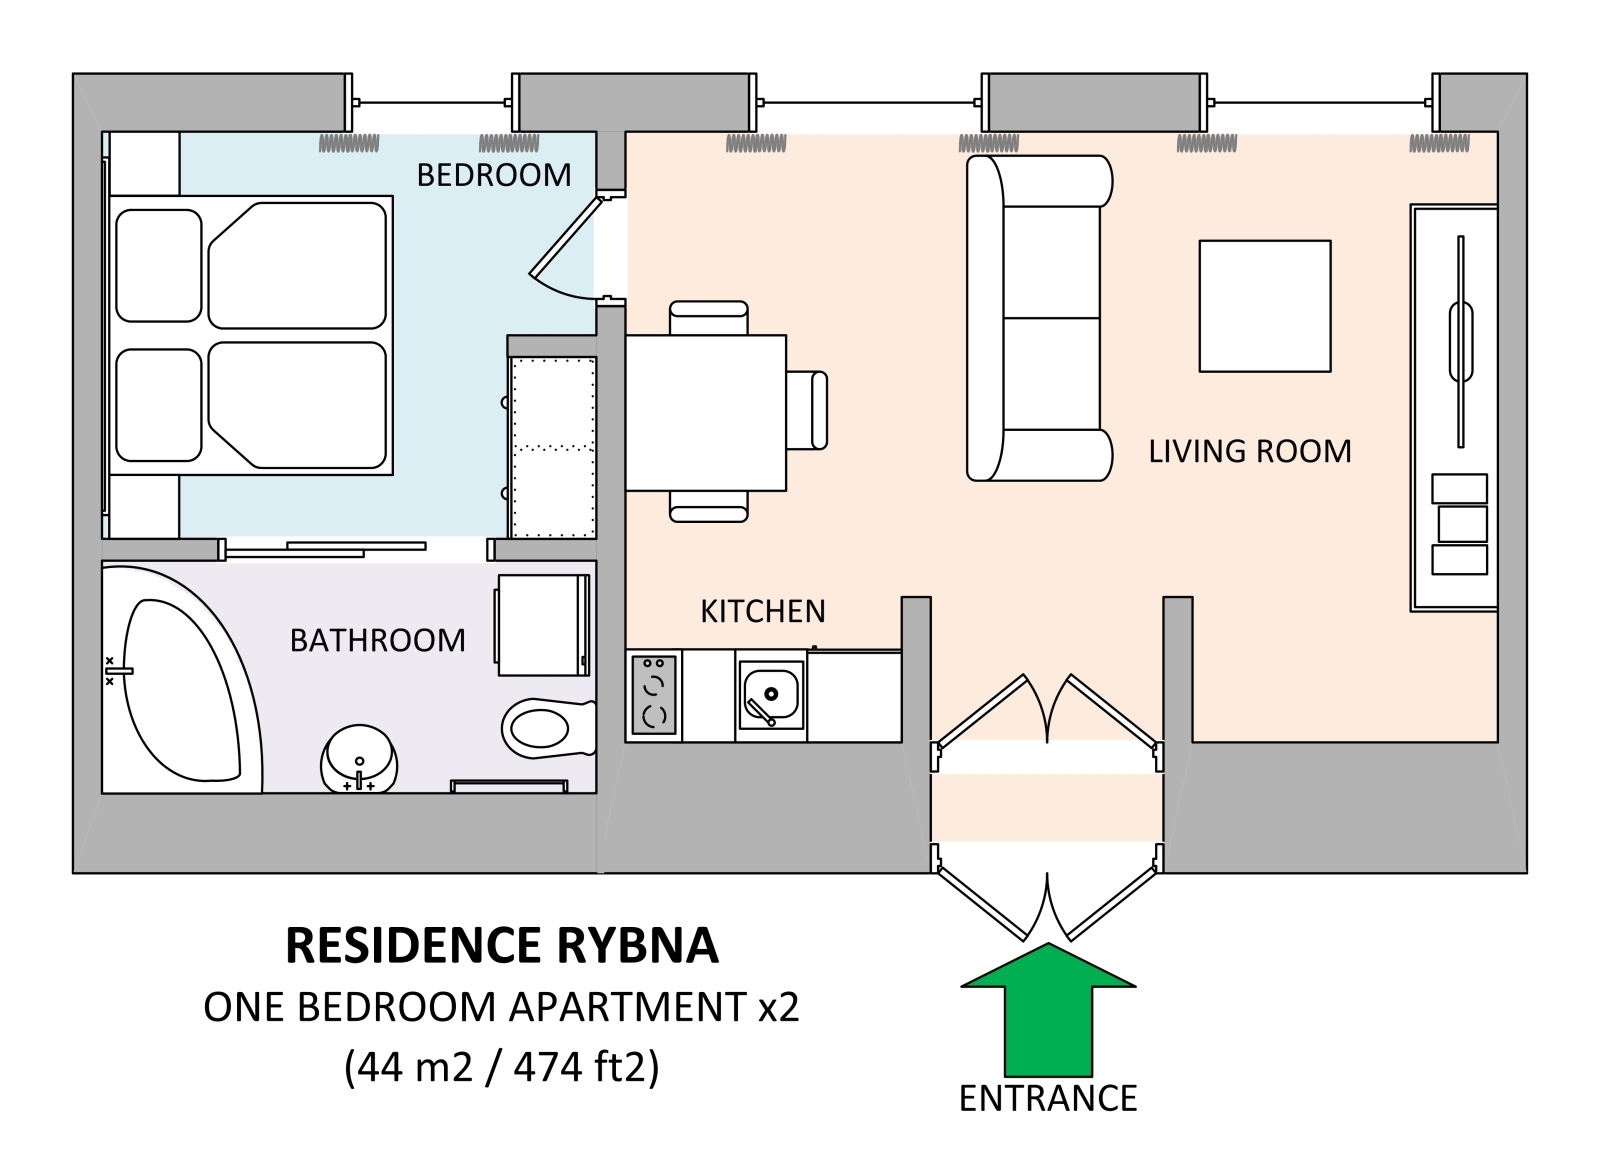 Floorplan of apartment x2 in Rybna Residence in Prague